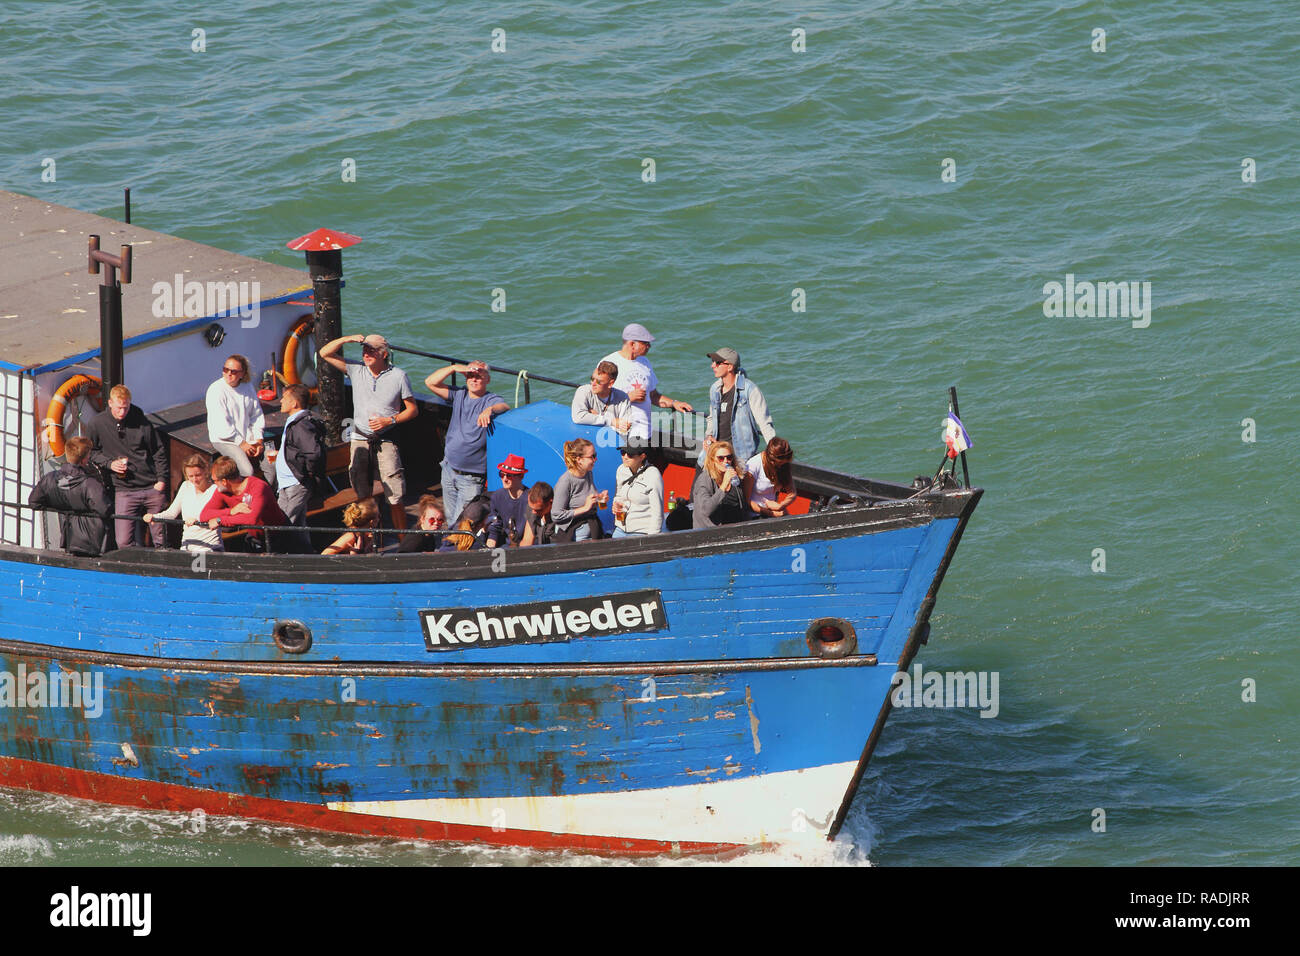 Warnemunde, Rostock, Germany - Jul 06, 2018: Passengers on fore of small vessel Stock Photo